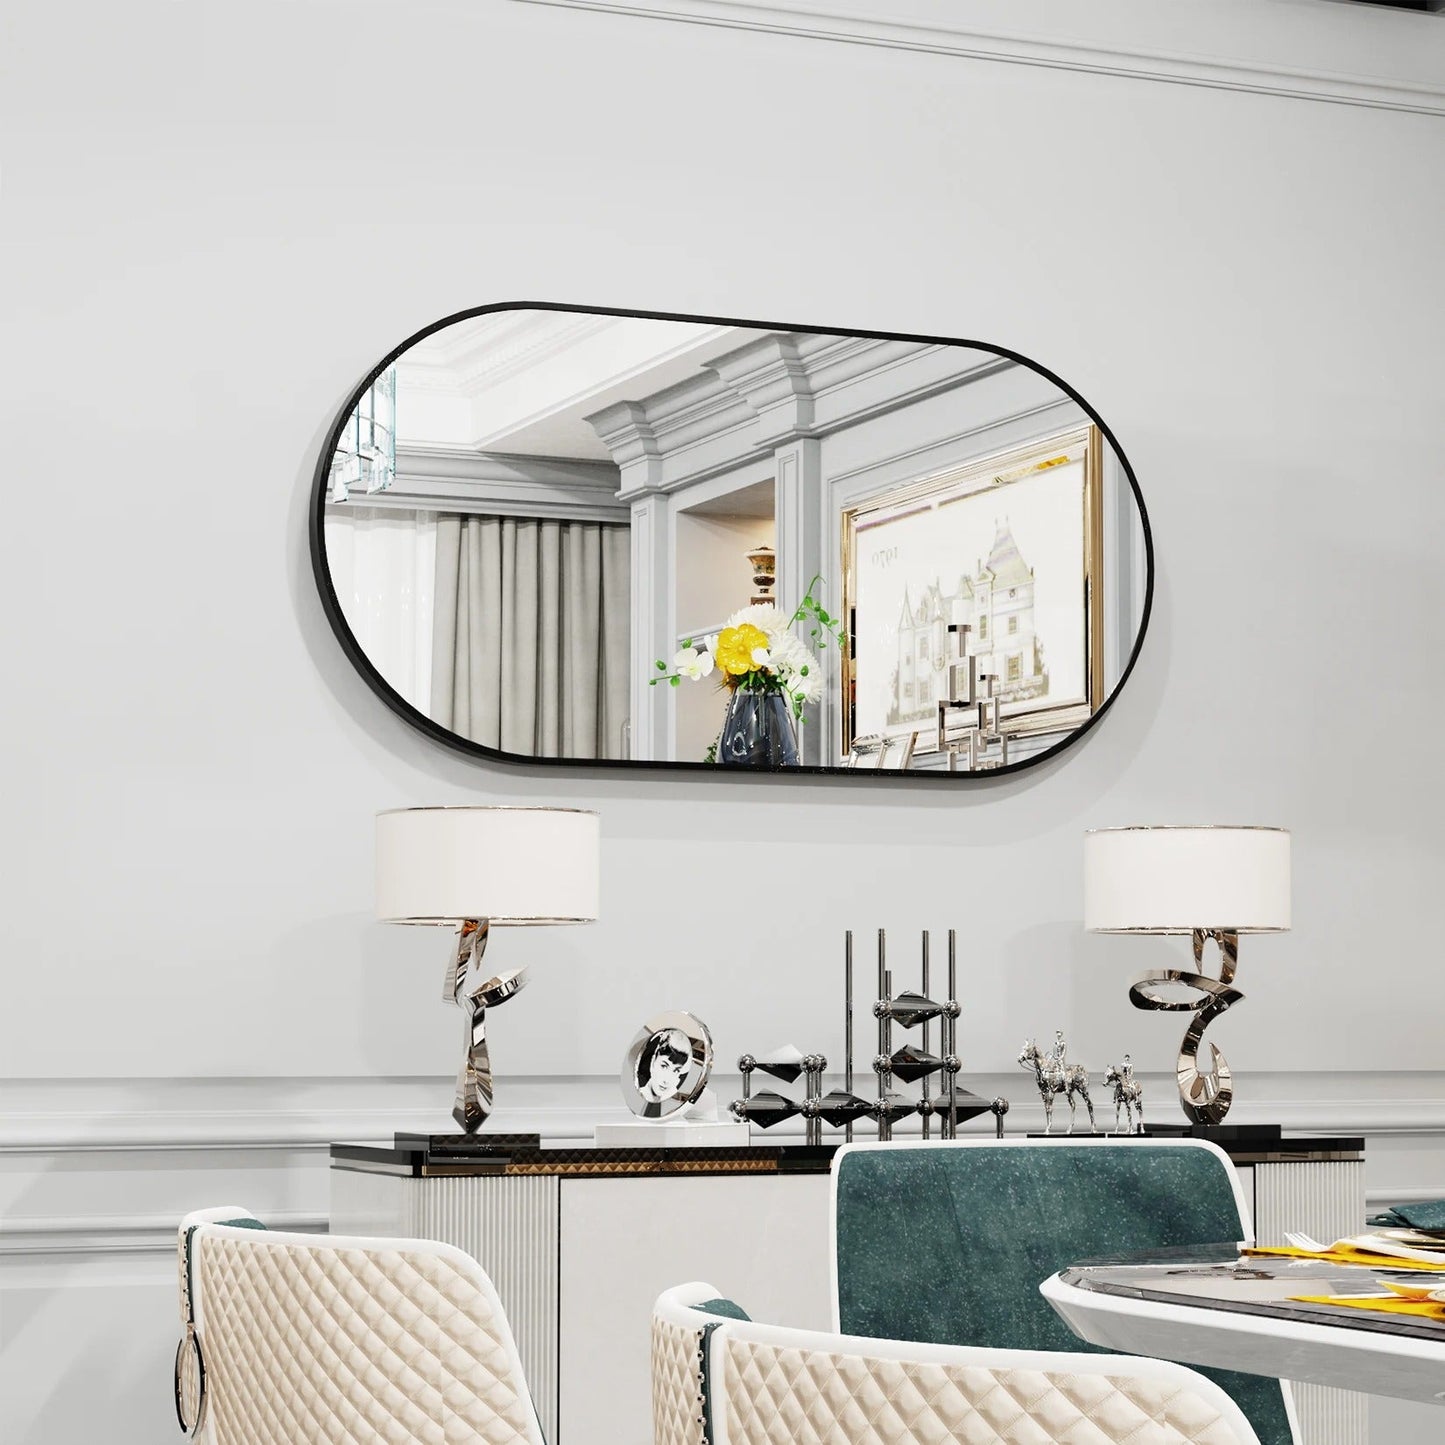 50X100cm Oval Black Mirror Metal Frame for Bathroom, Entryway, Living Room Vertical & Horizontal Hang